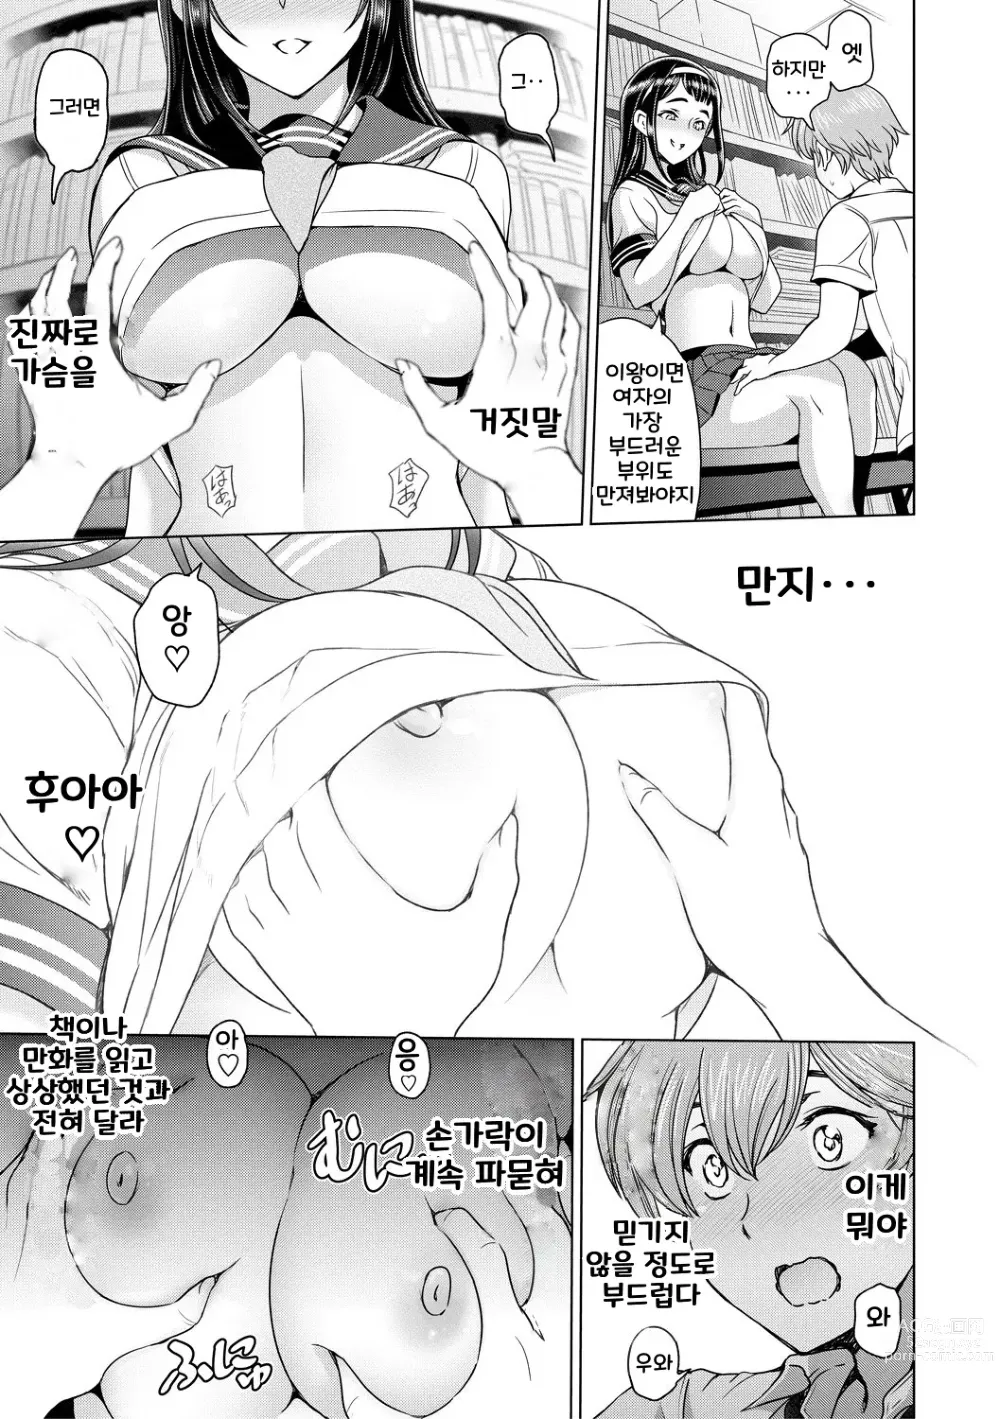 Page 15 of manga Nee Ecchi shichao kka - Hey, lets have sex.